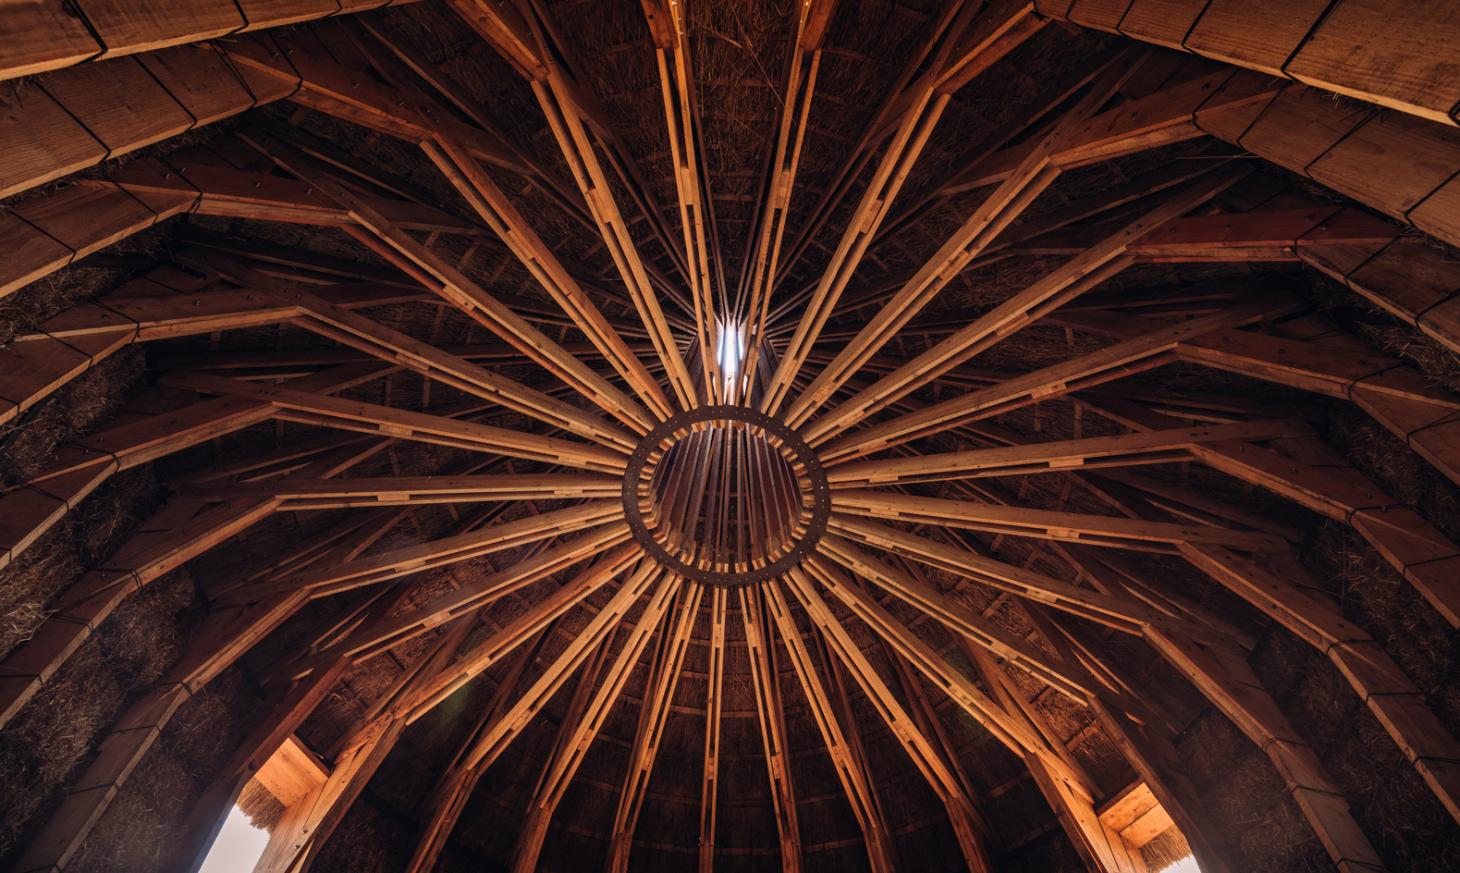 Studio Morison builds a ‘spiritual’ sanctuary out of straw in Cambridgeshire